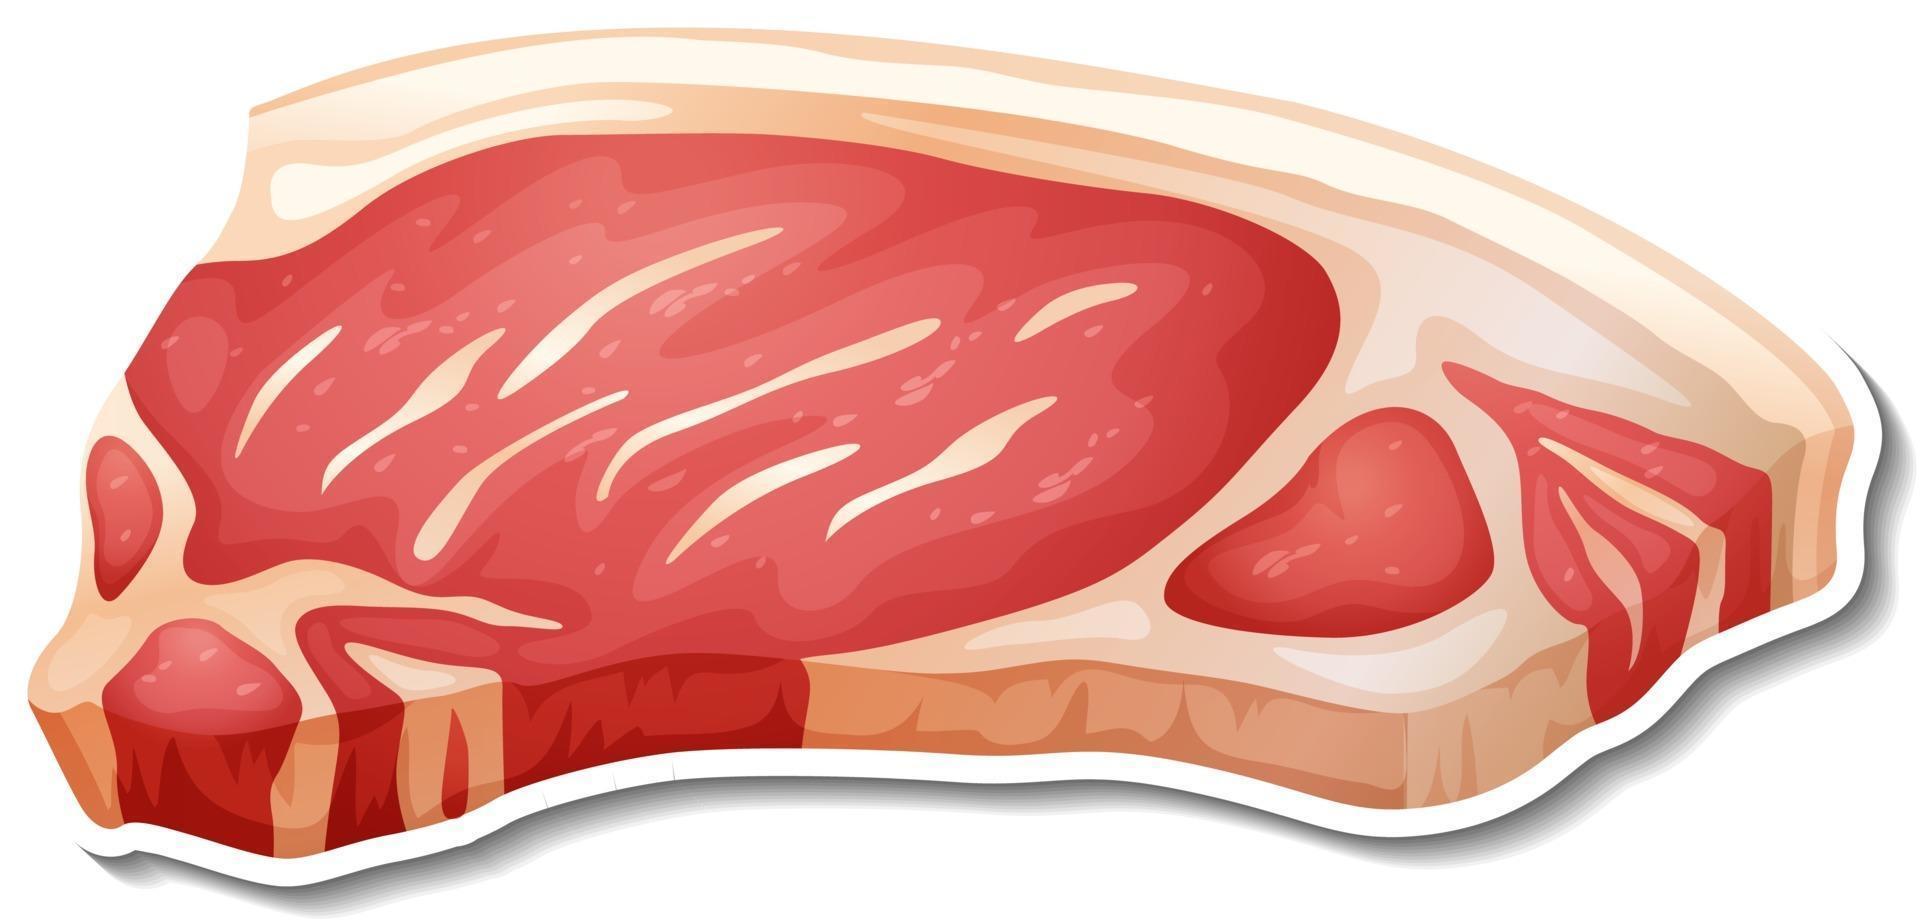 rauw vlees sticker op witte achtergrond vector